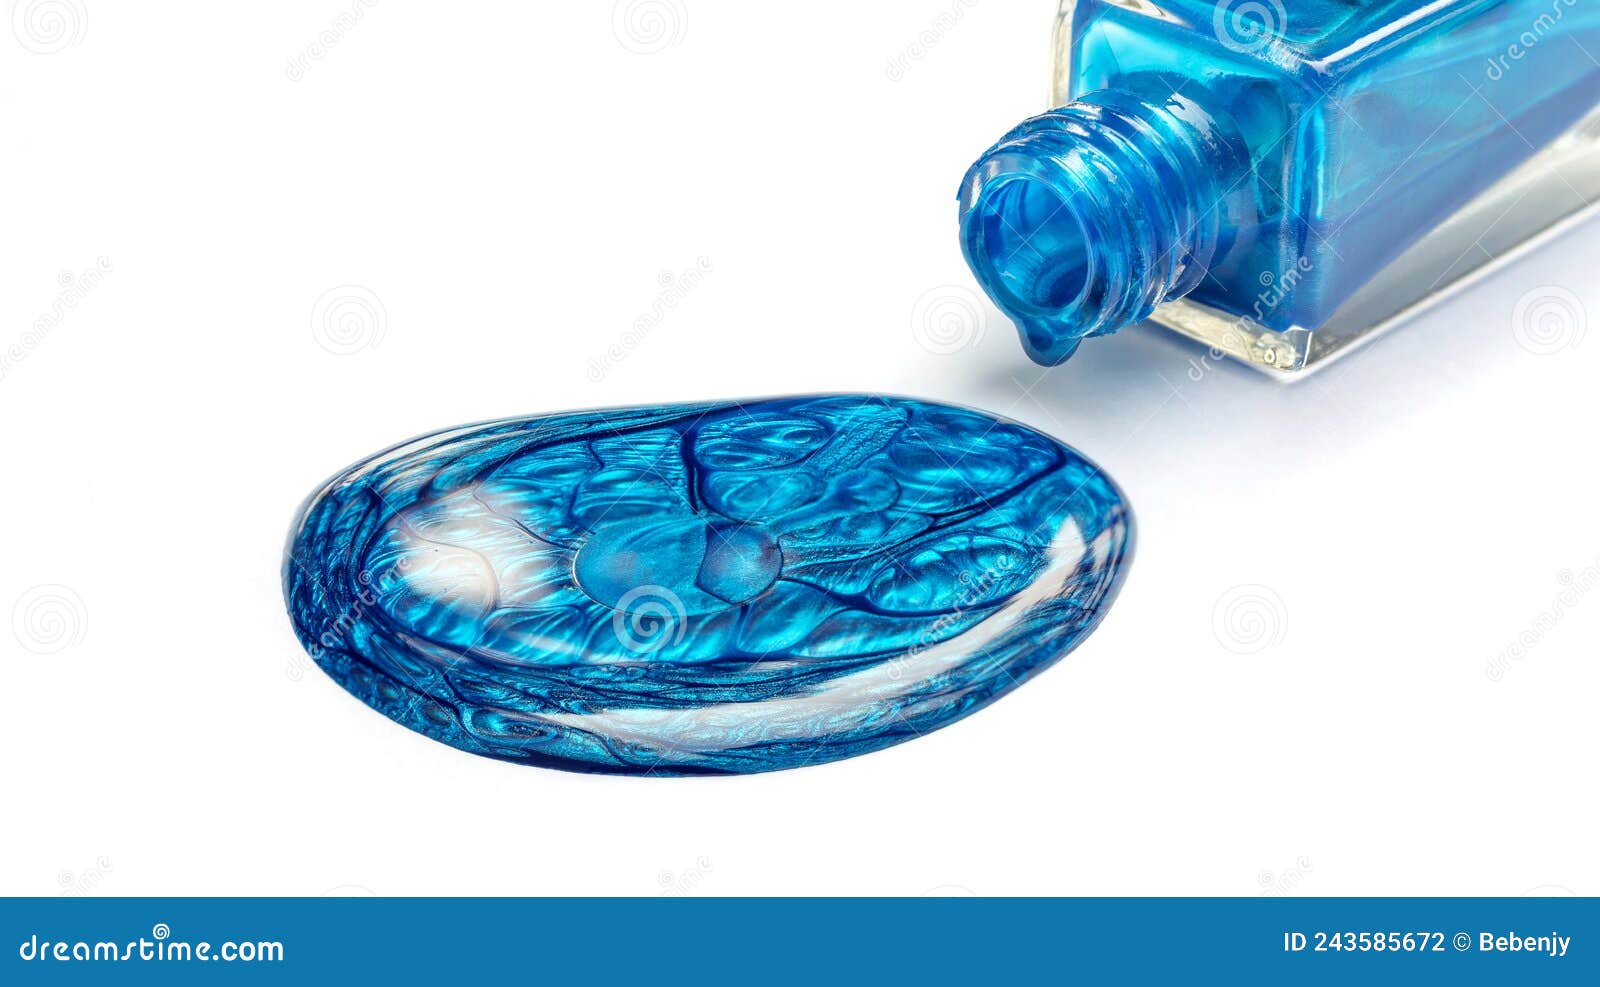 8. Metallic blue nail polish - wide 7